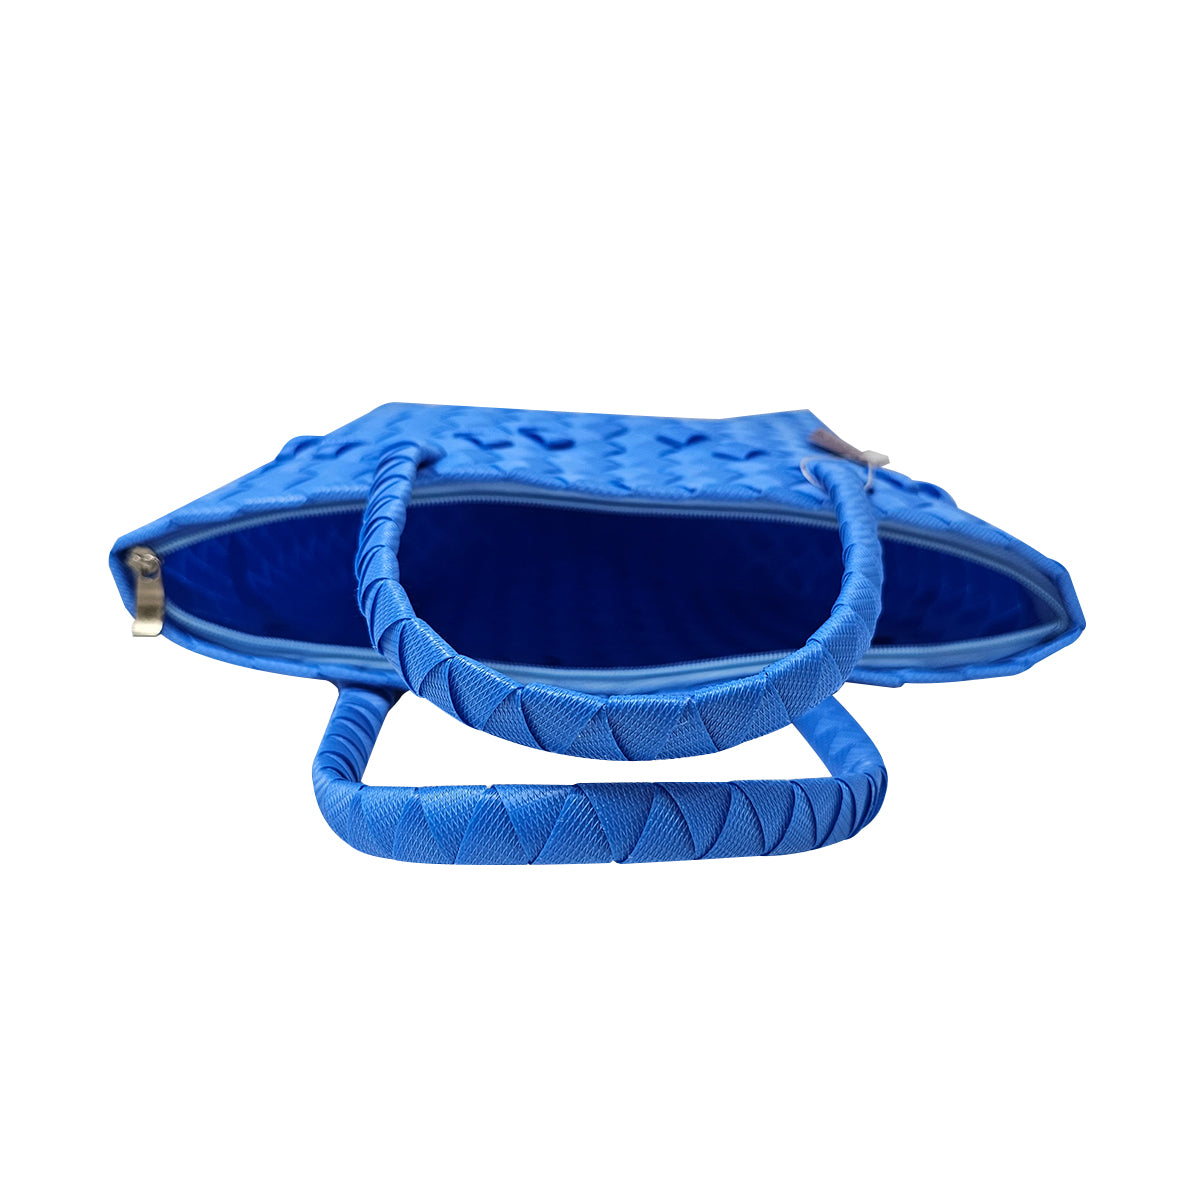 Misenka Handicrafts Philippine Bayong Azure Blue Handy with Zipper Bag - SALE 50% OFF